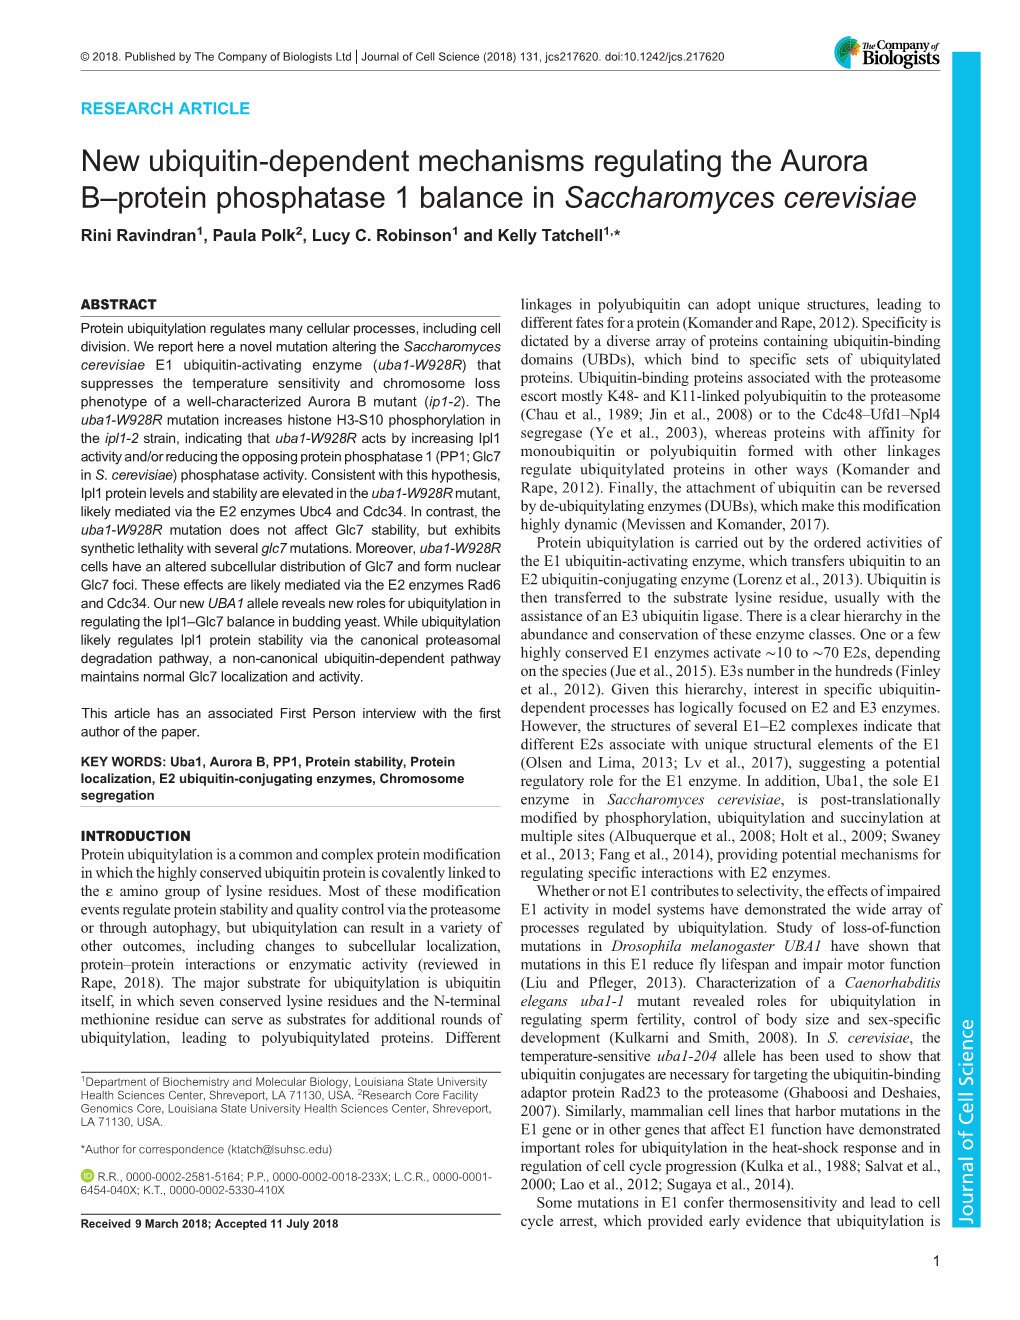 New Ubiquitin-Dependent Mechanisms Regulating the Aurora B–Protein Phosphatase 1 Balance in Saccharomyces Cerevisiae Rini Ravindran1, Paula Polk2, Lucy C